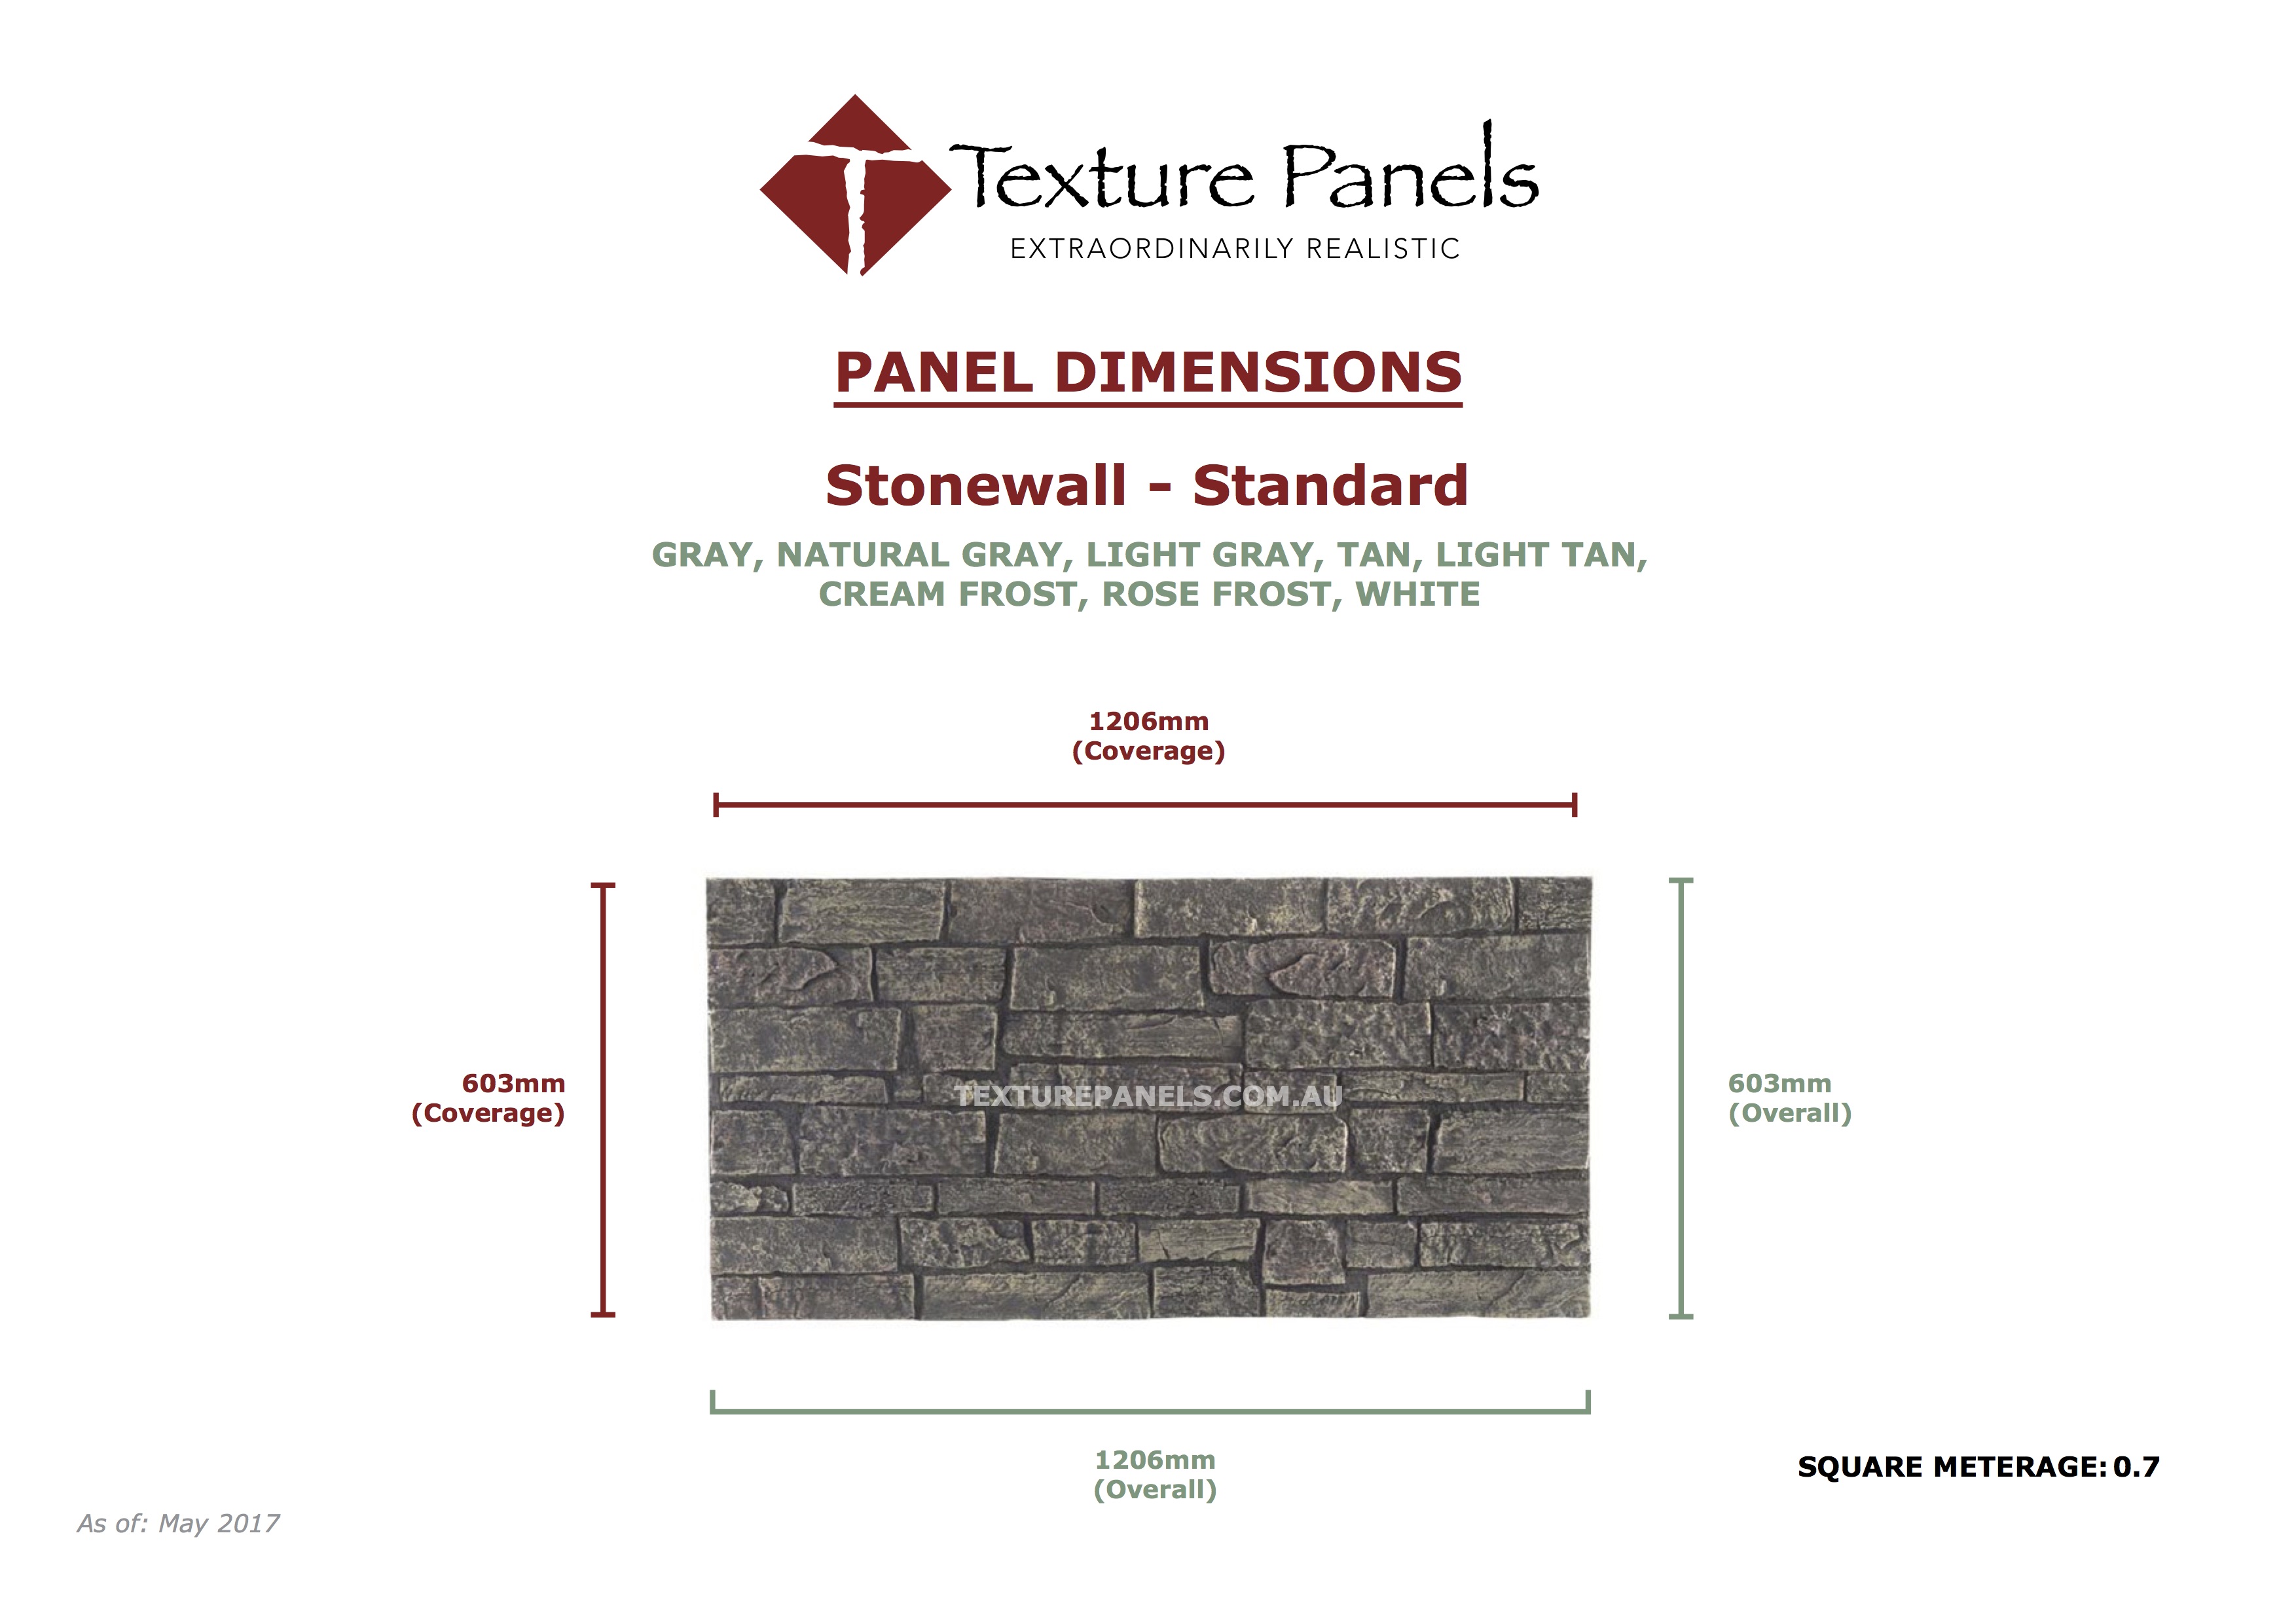 Stonewall Standard - Dimensions